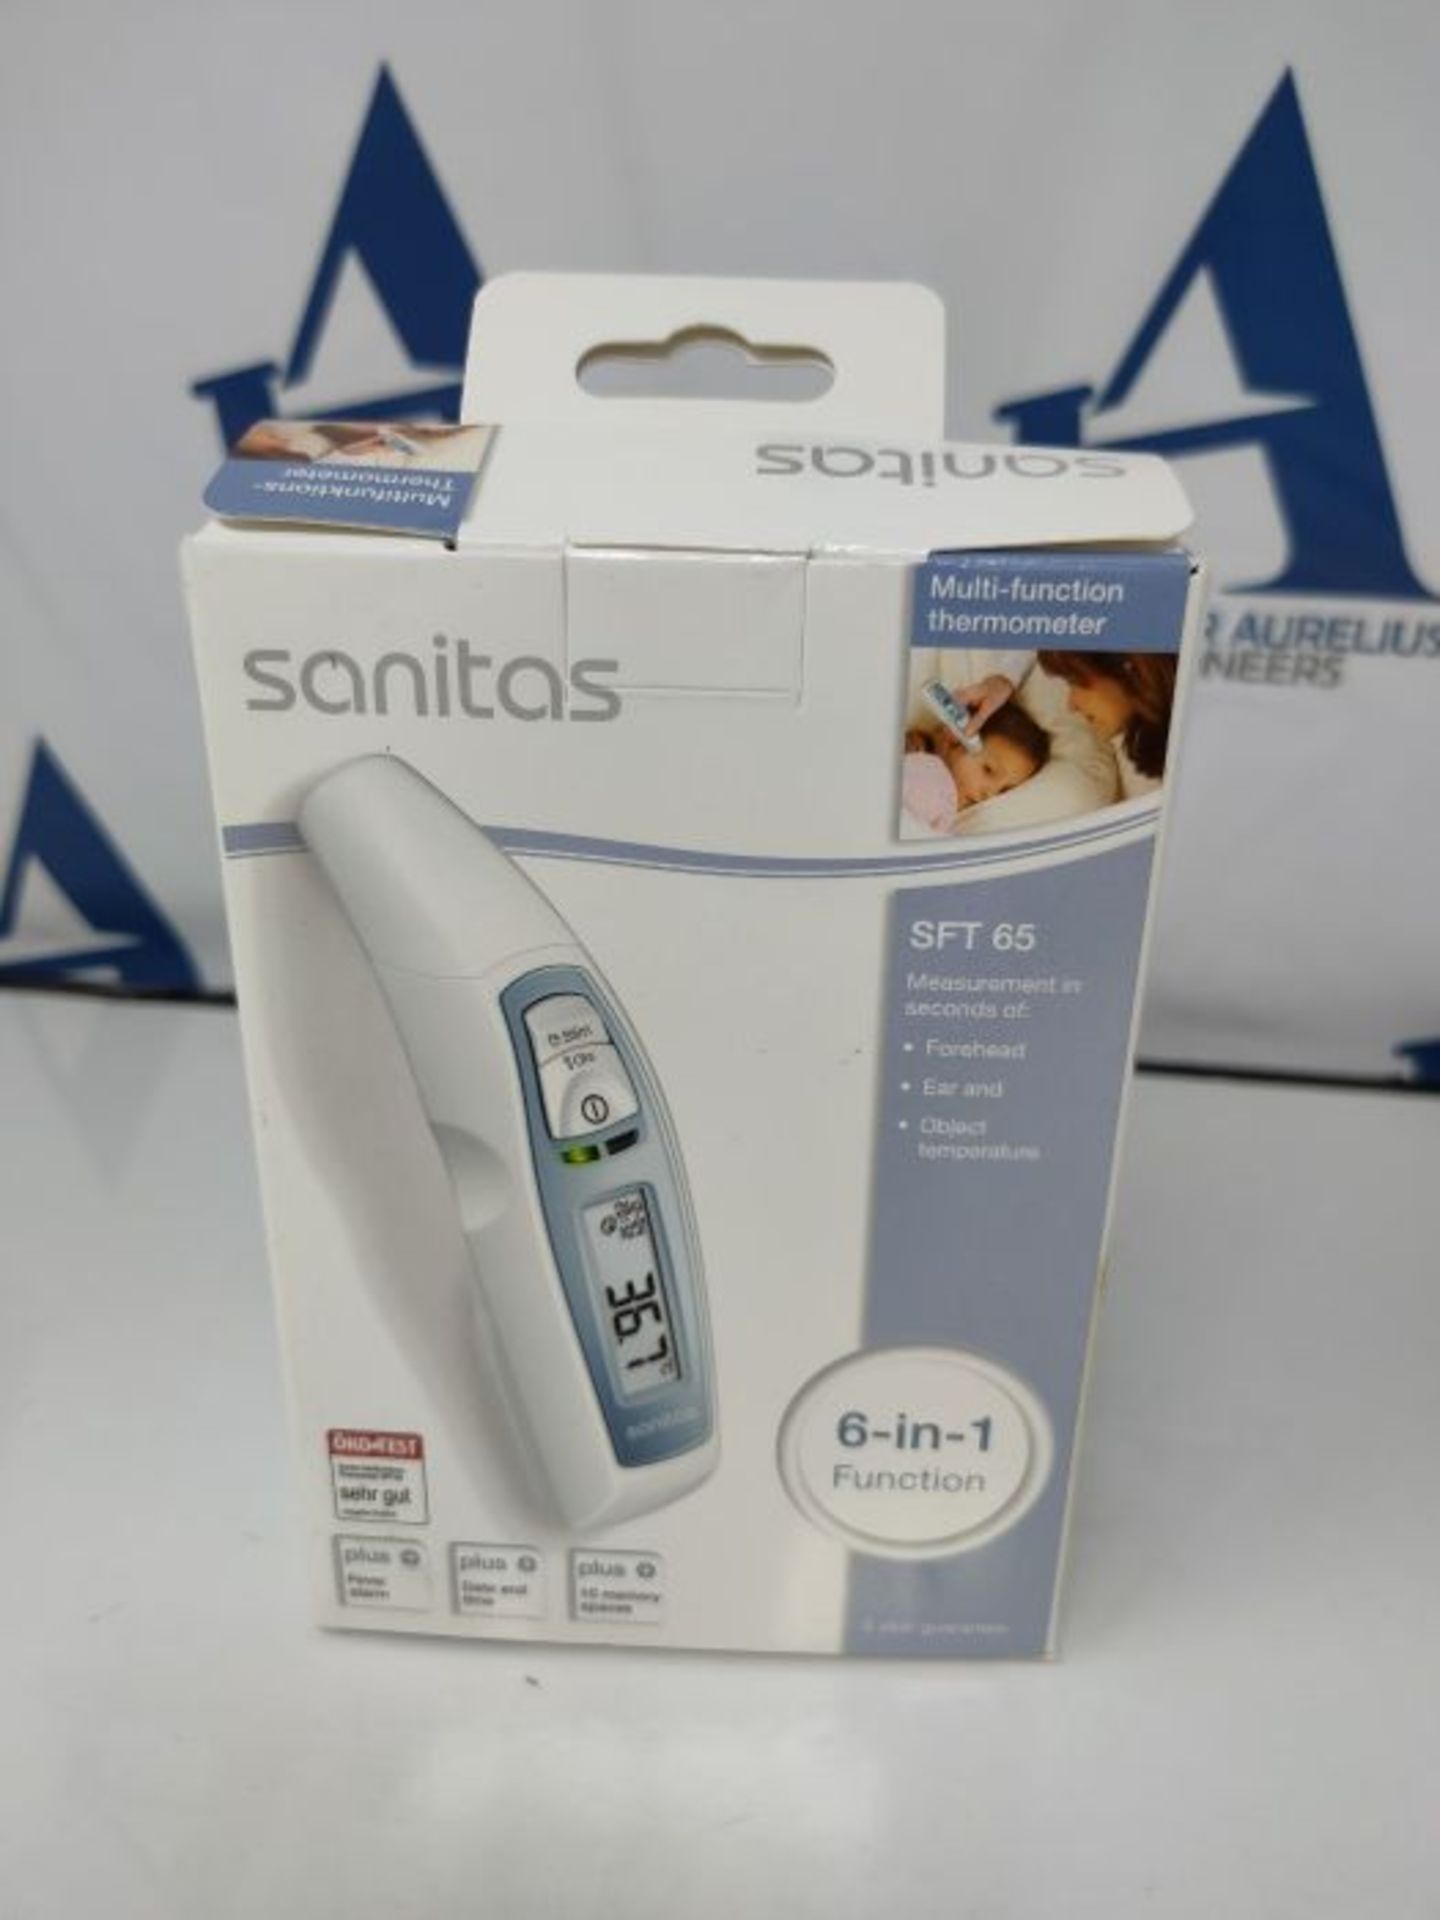 Sanitas SFT65 Multifunction Medical Thermometer - Image 2 of 3